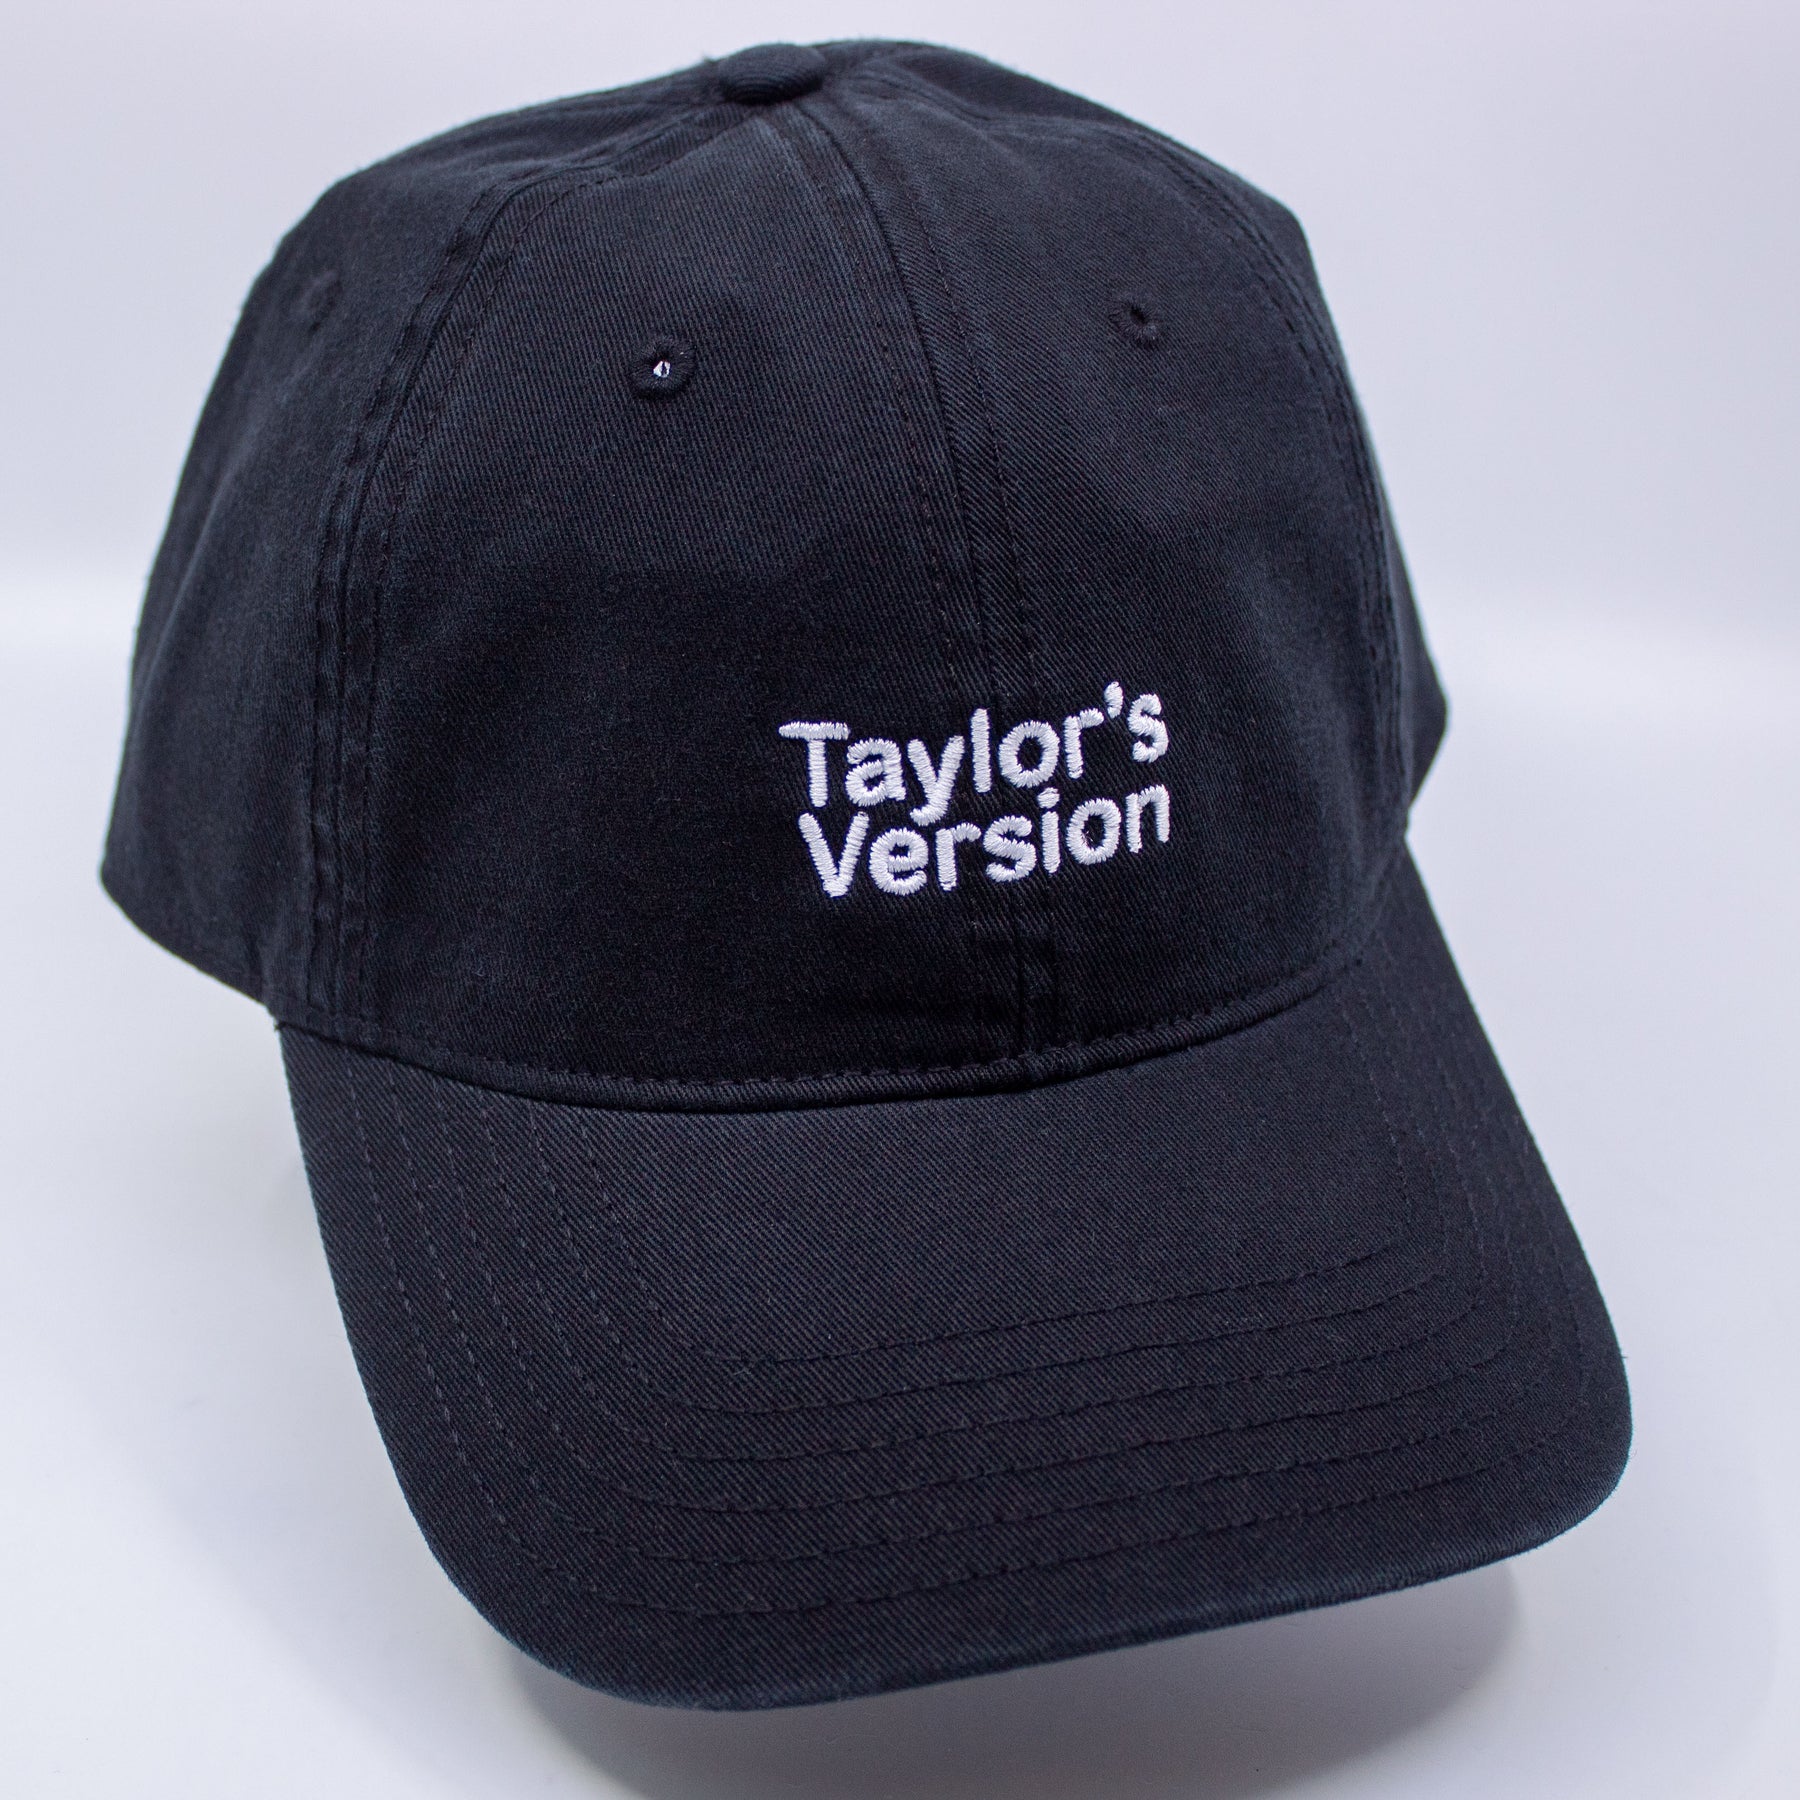 Standard Goods Taylor's Version Dad Hat - Black White